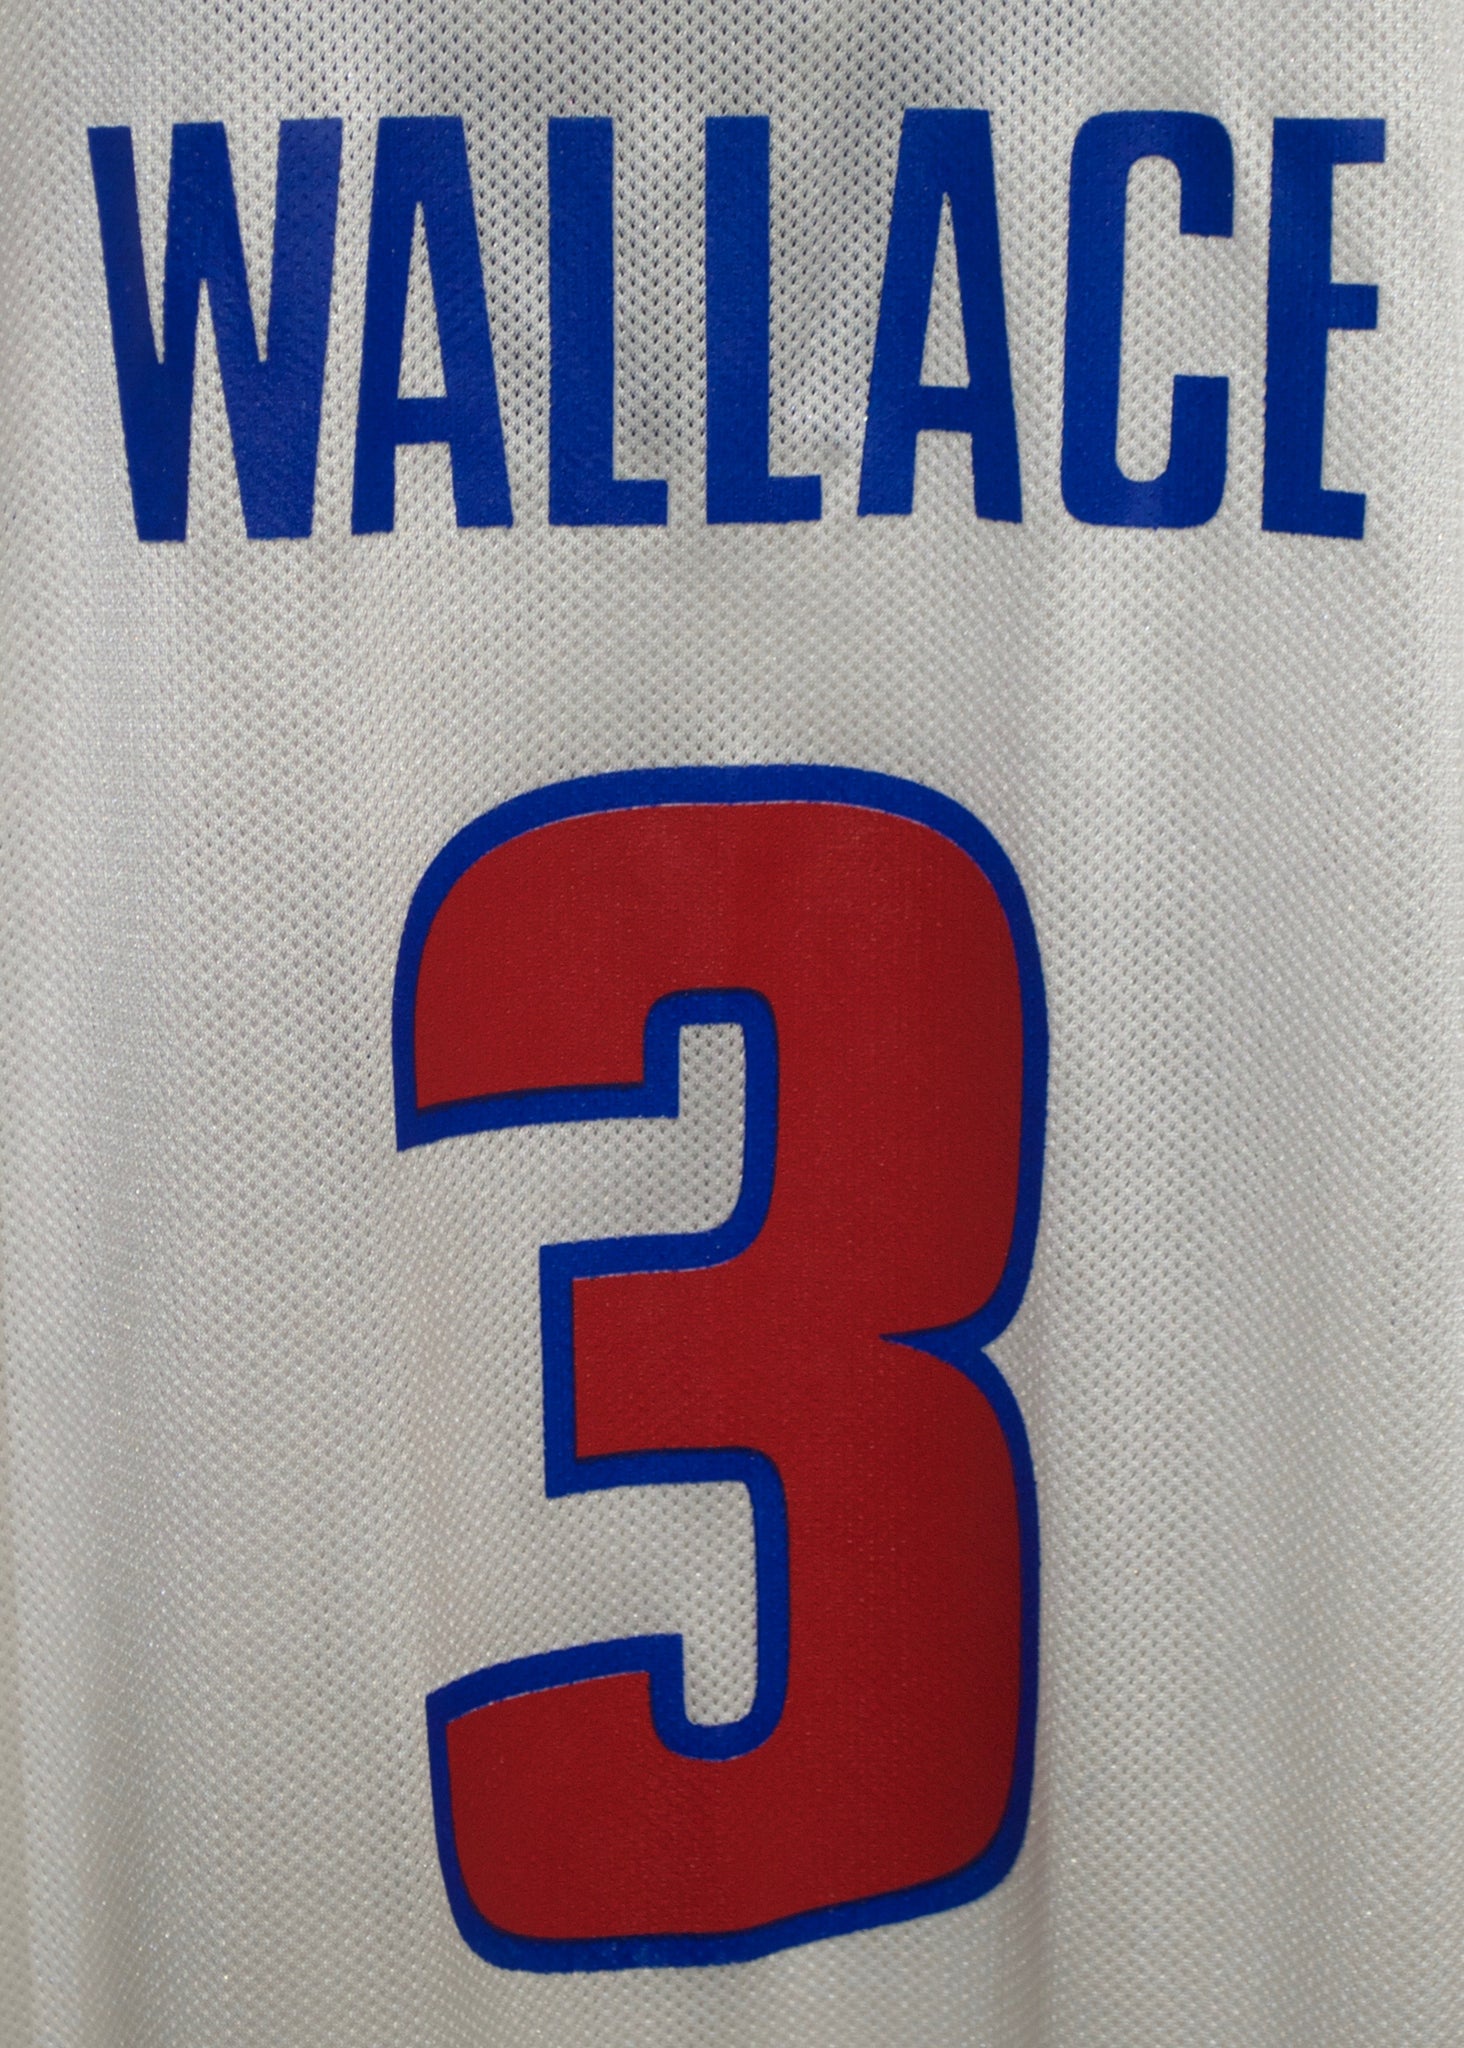 Ben Wallace Detroit Jersey Qiangy - Ben Wallace - Pin